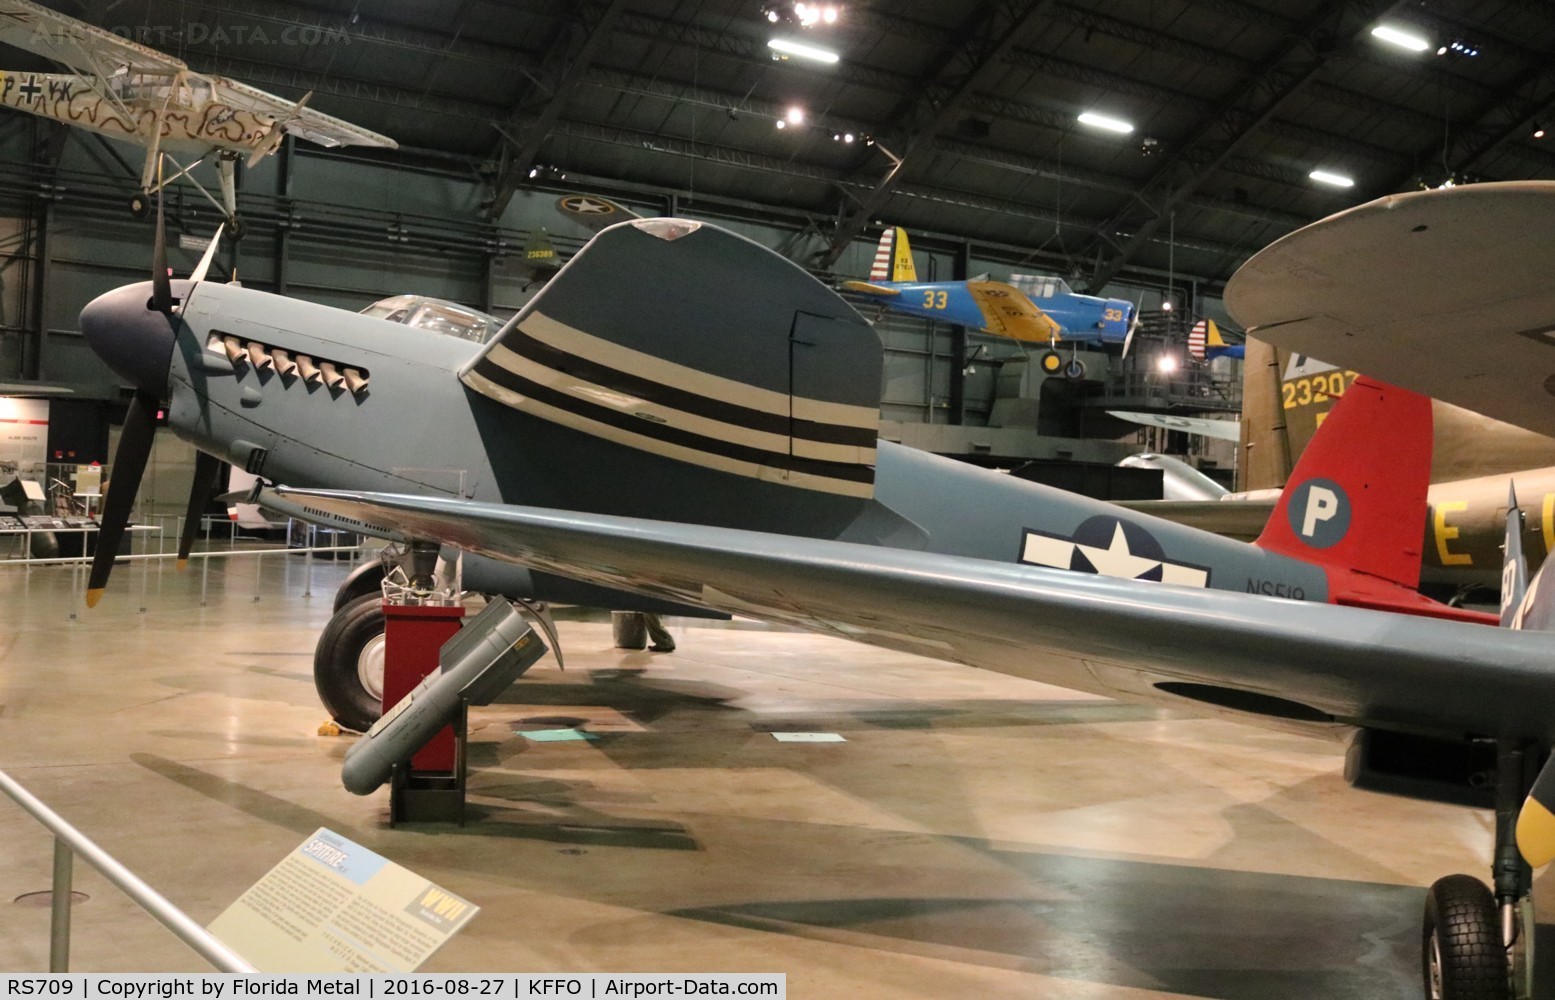 RS709, 1946 De Havilland DH-98 Mosquito B Mk.35 C/N Not found, USAF Museum 2016